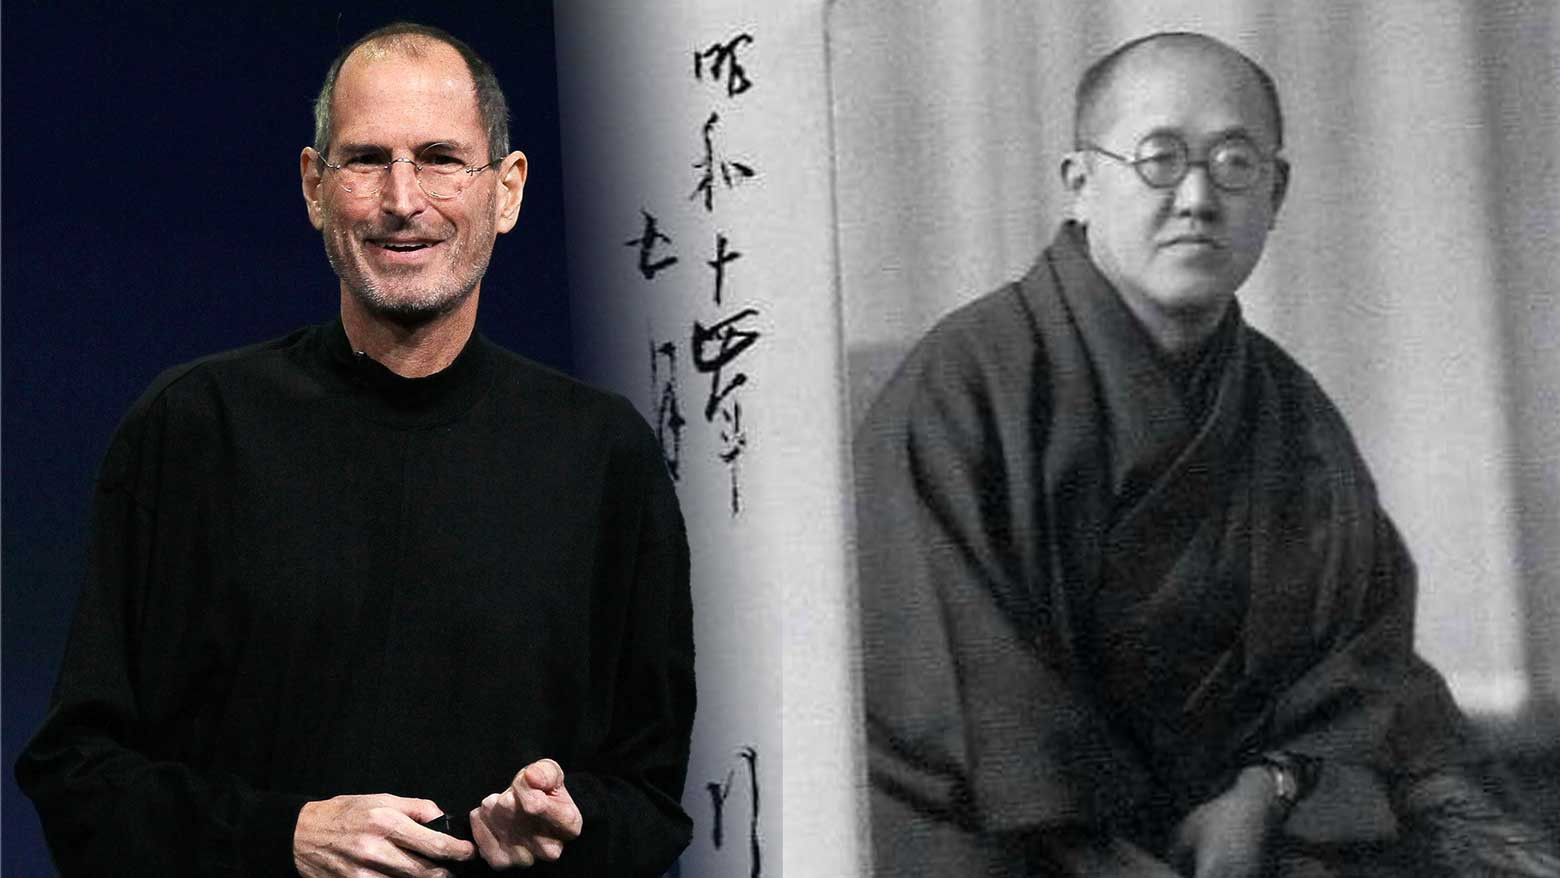 The beginning of Steve Jobs' lifelong love of shin-hanga